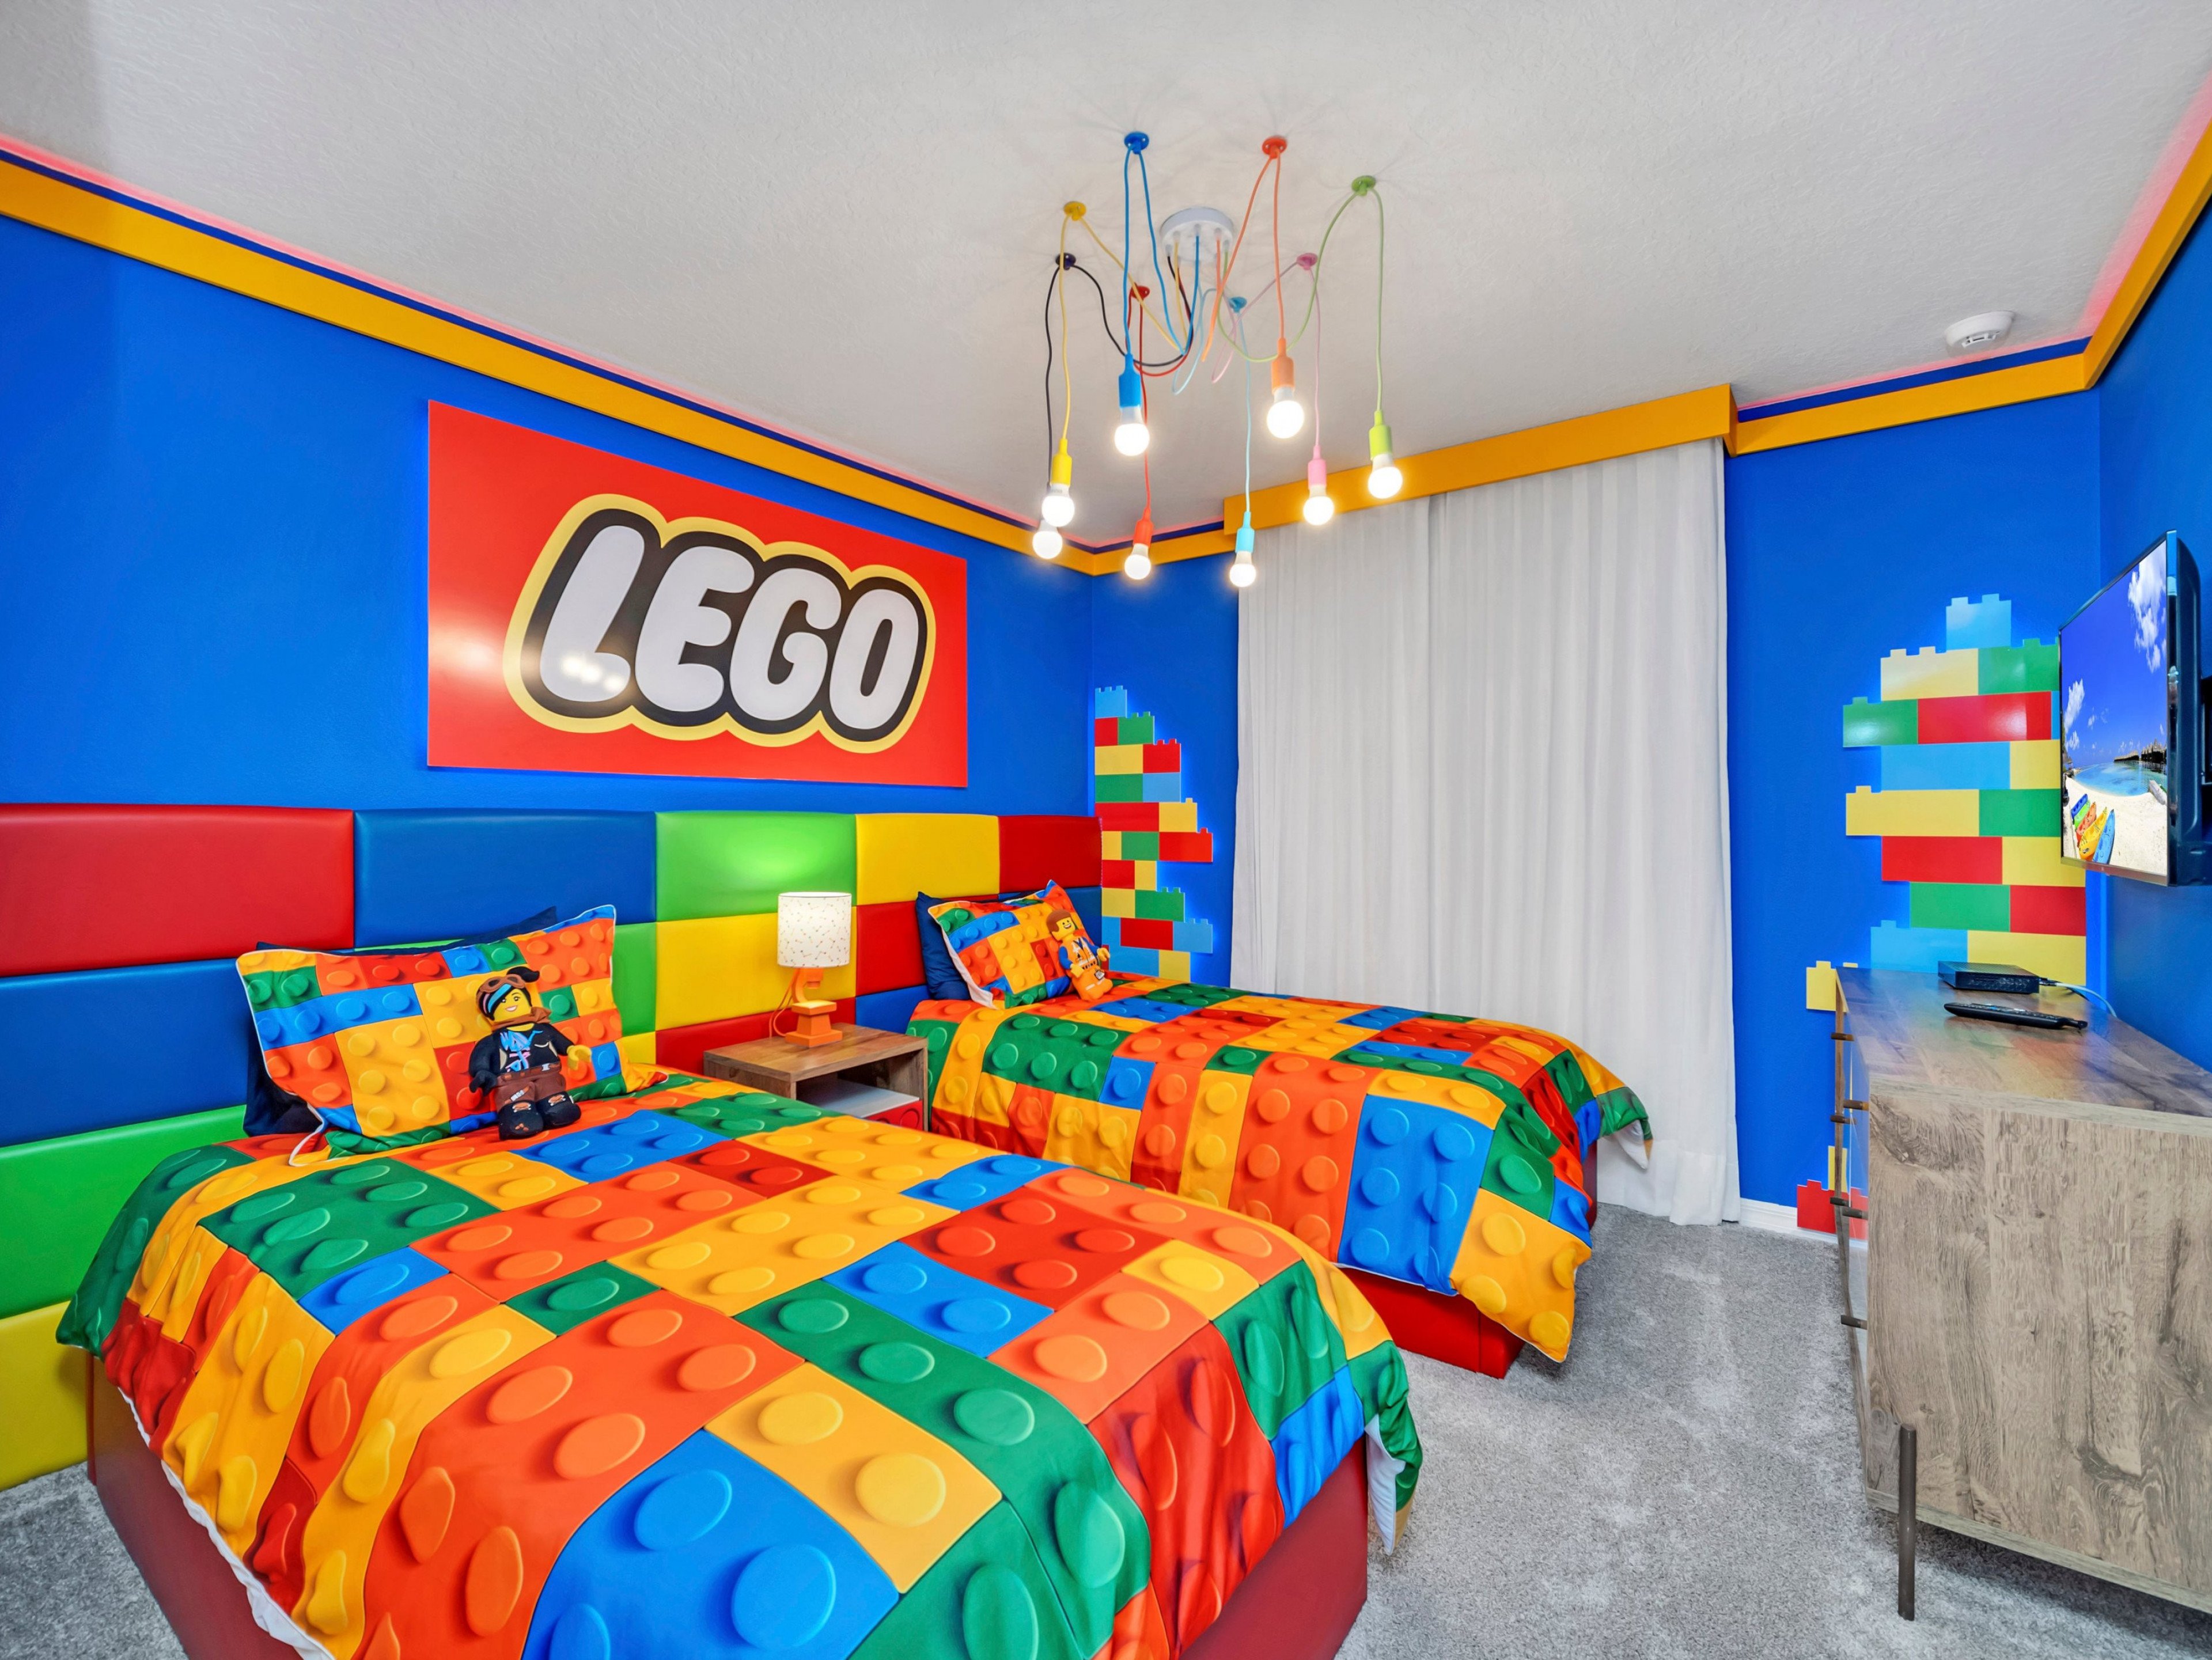  Orlando homes with Legoland-themed rooms - Windsor Island Resort 60